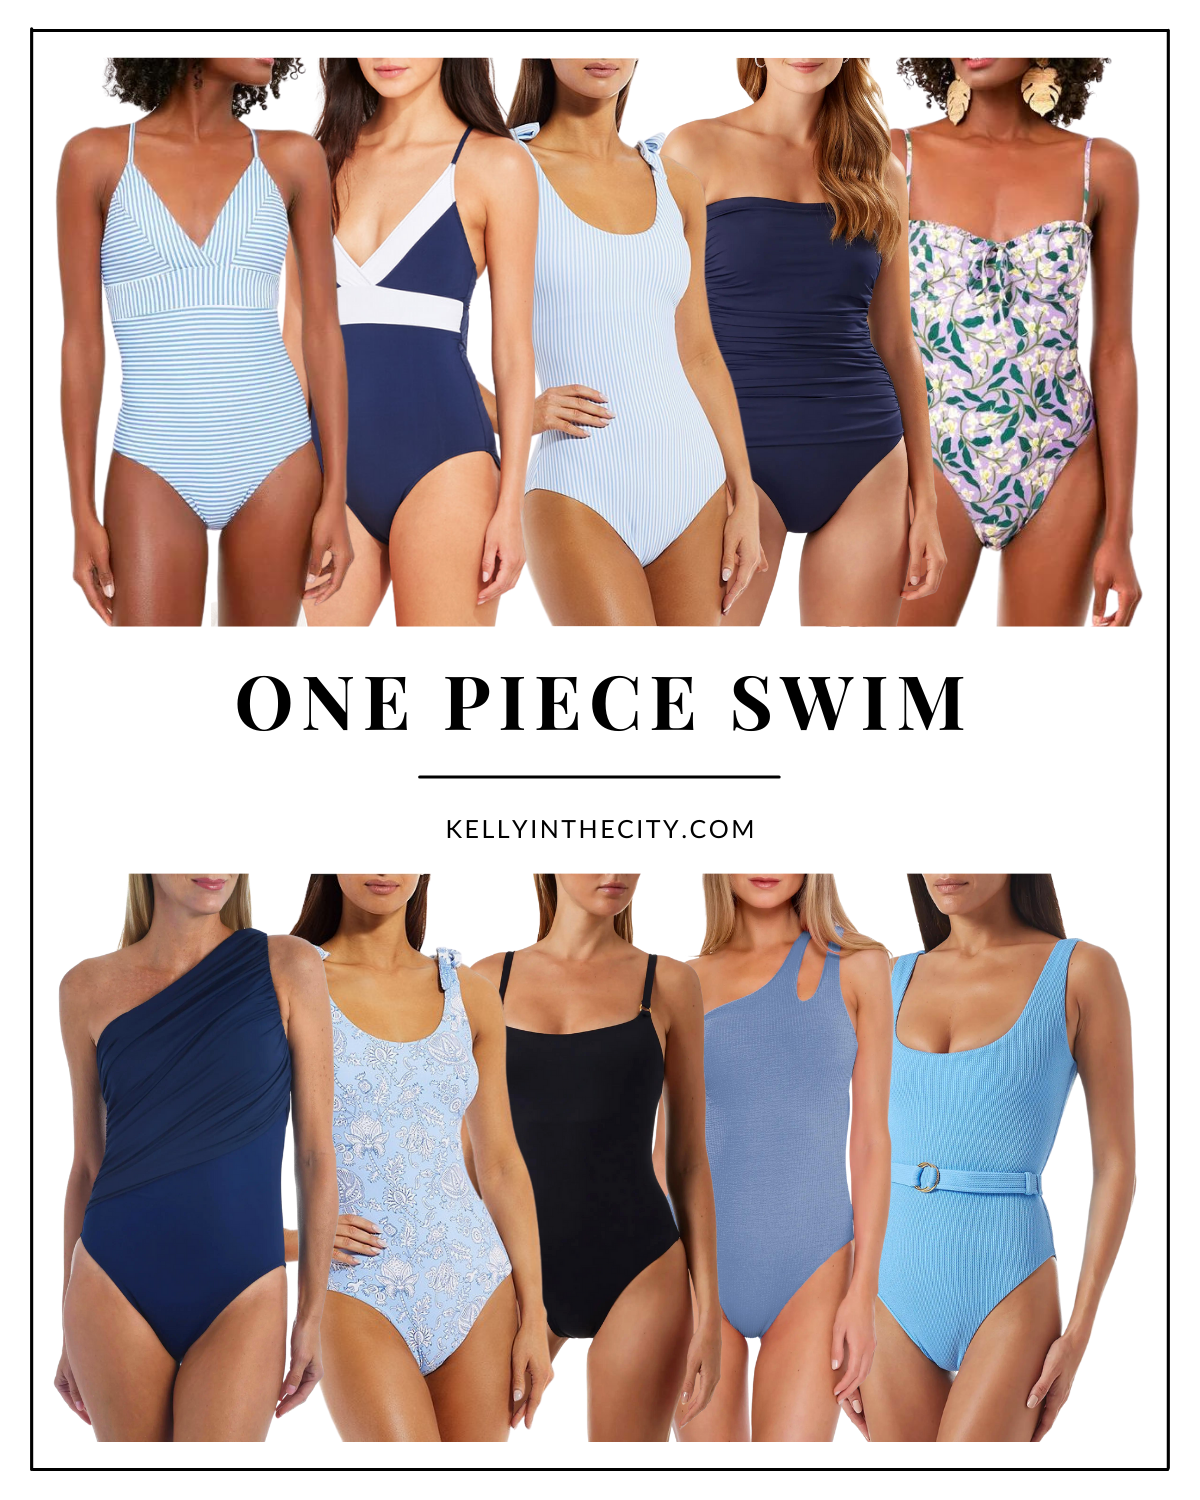 One piece swim, swimsuit, bathing suit